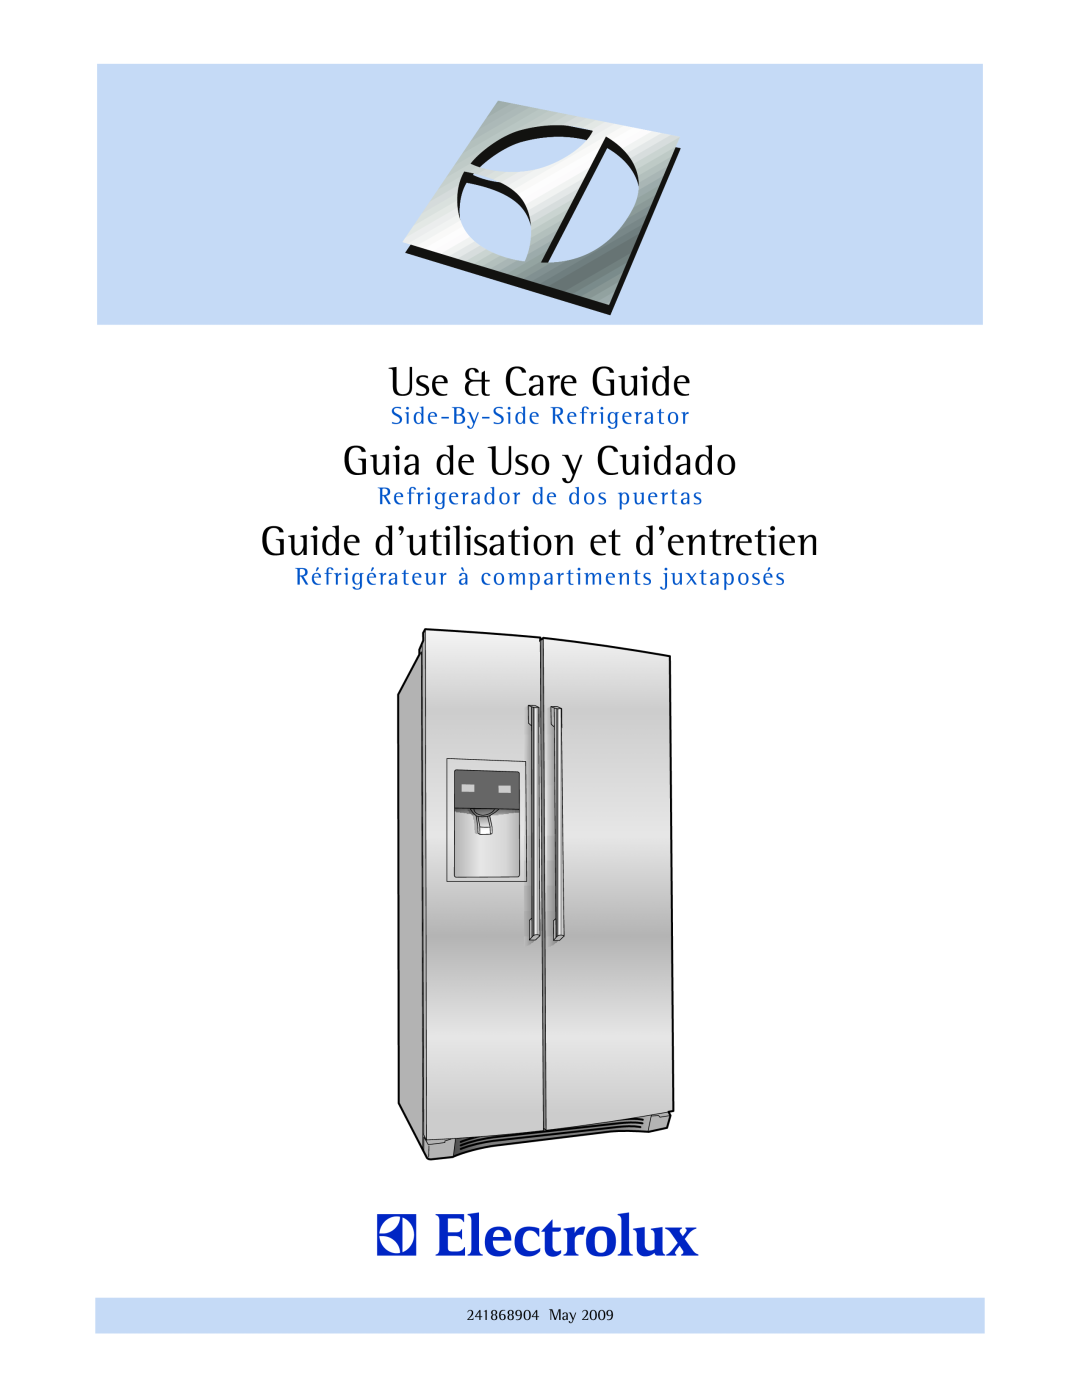 Electrolux manual Use & Care Guide, Guia de Uso y Cuidado, Guide d’utilisation et d’entretien, 241868904 May 